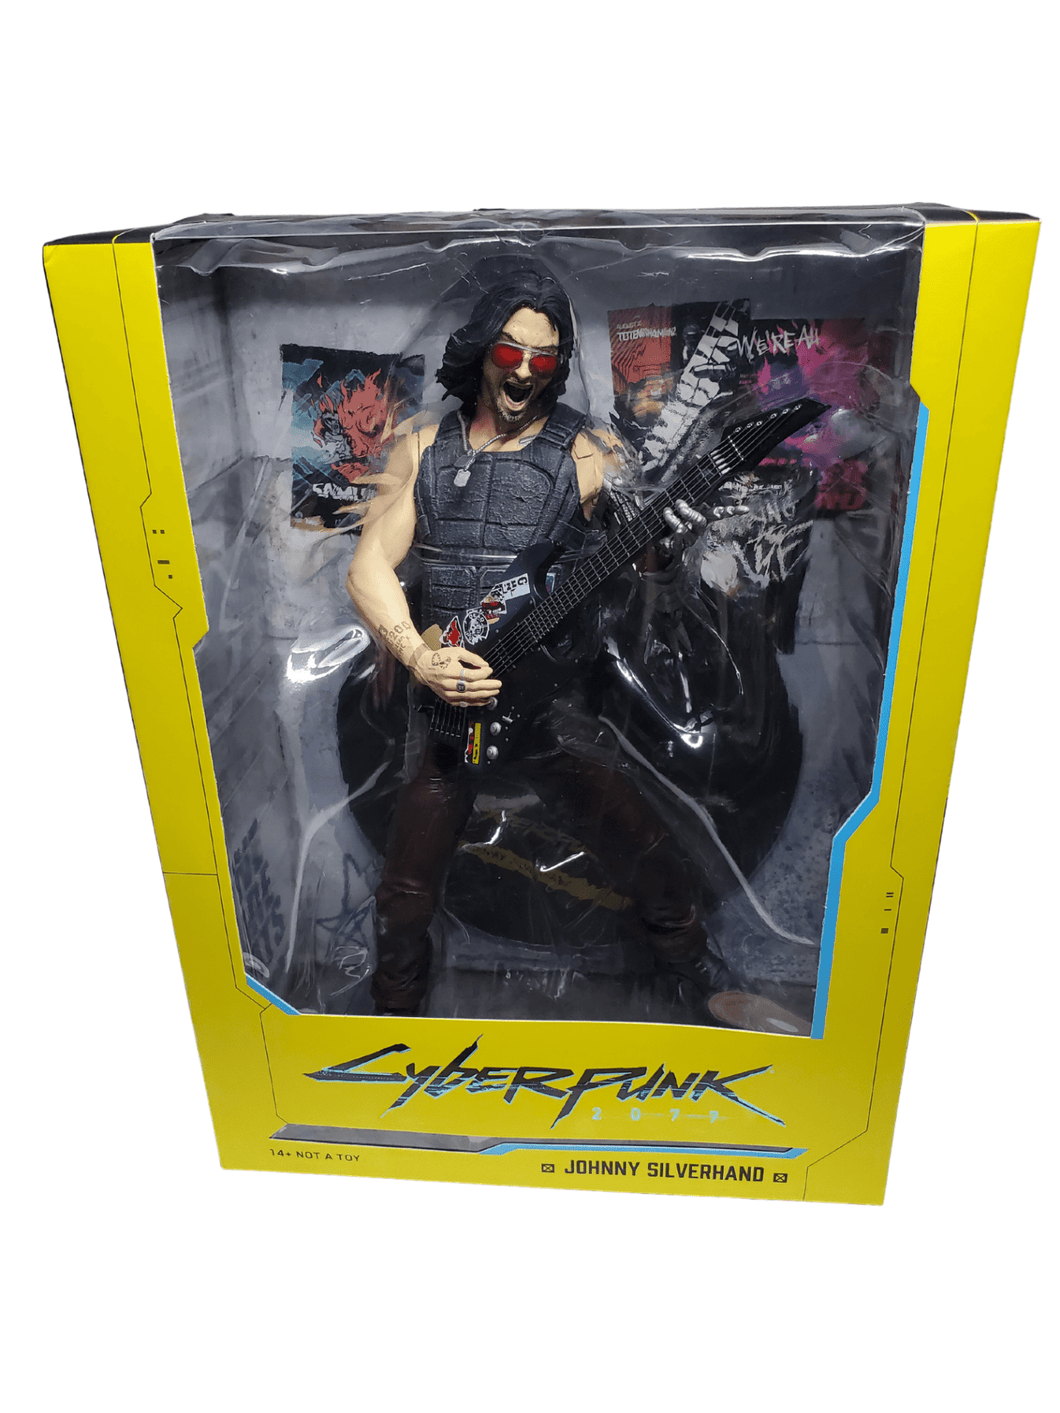 McFarlane Toys Statue Cyberpunk 2077 12-inch Scale Johnny Silverhand Deluxe Figure